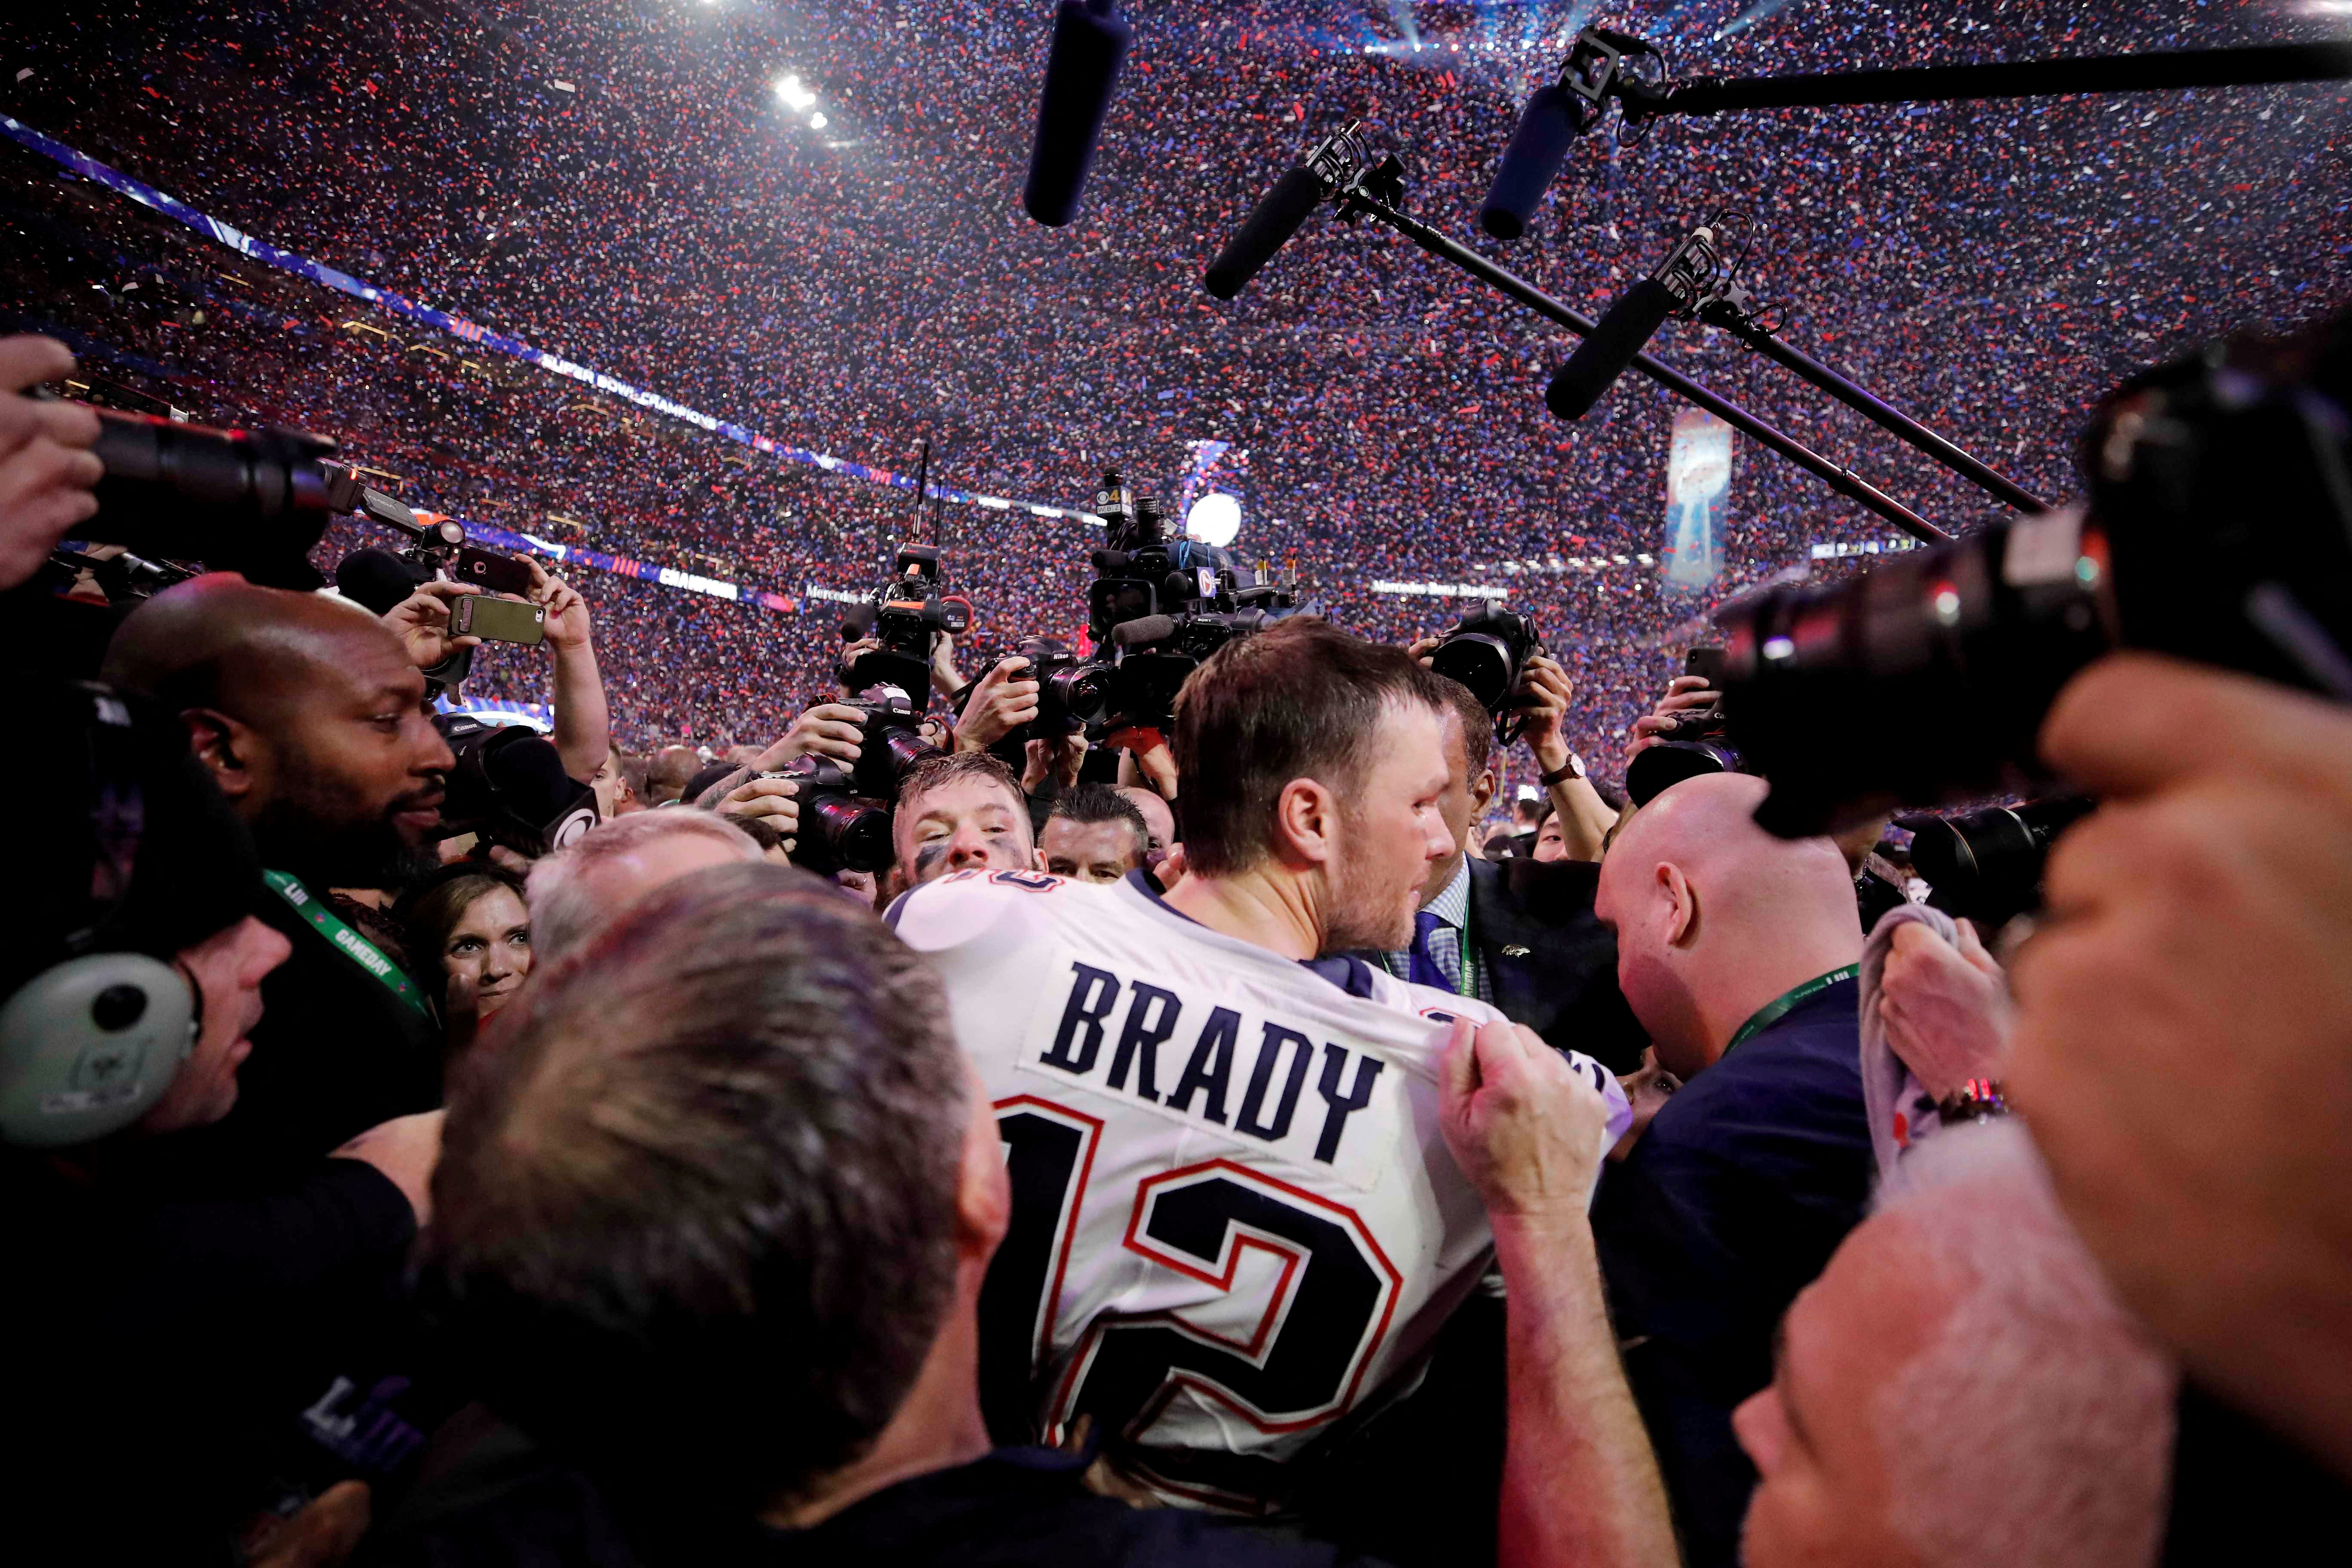 FOTO DE ARCHIVO: Tom Brady, de los New England Patriots, celebra la victoria en la Super Bowl LIII, el 3 de febrero de 2019 (Reuters)